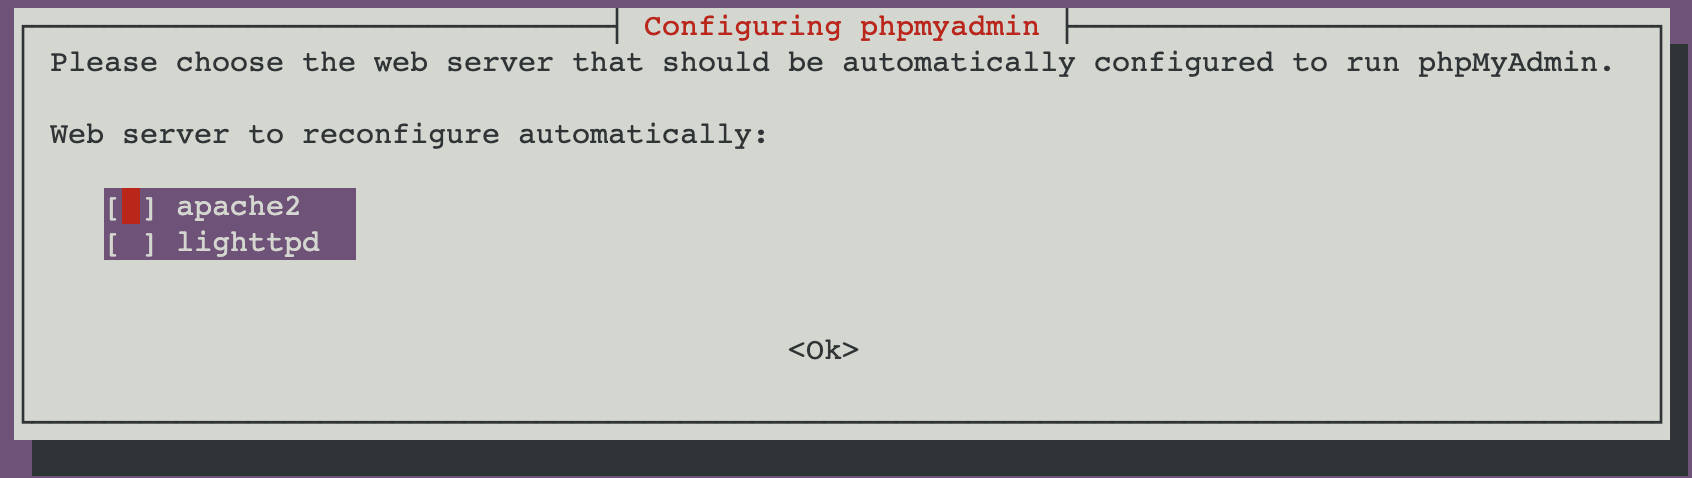 Web server selection when configuring phpMyAdmin